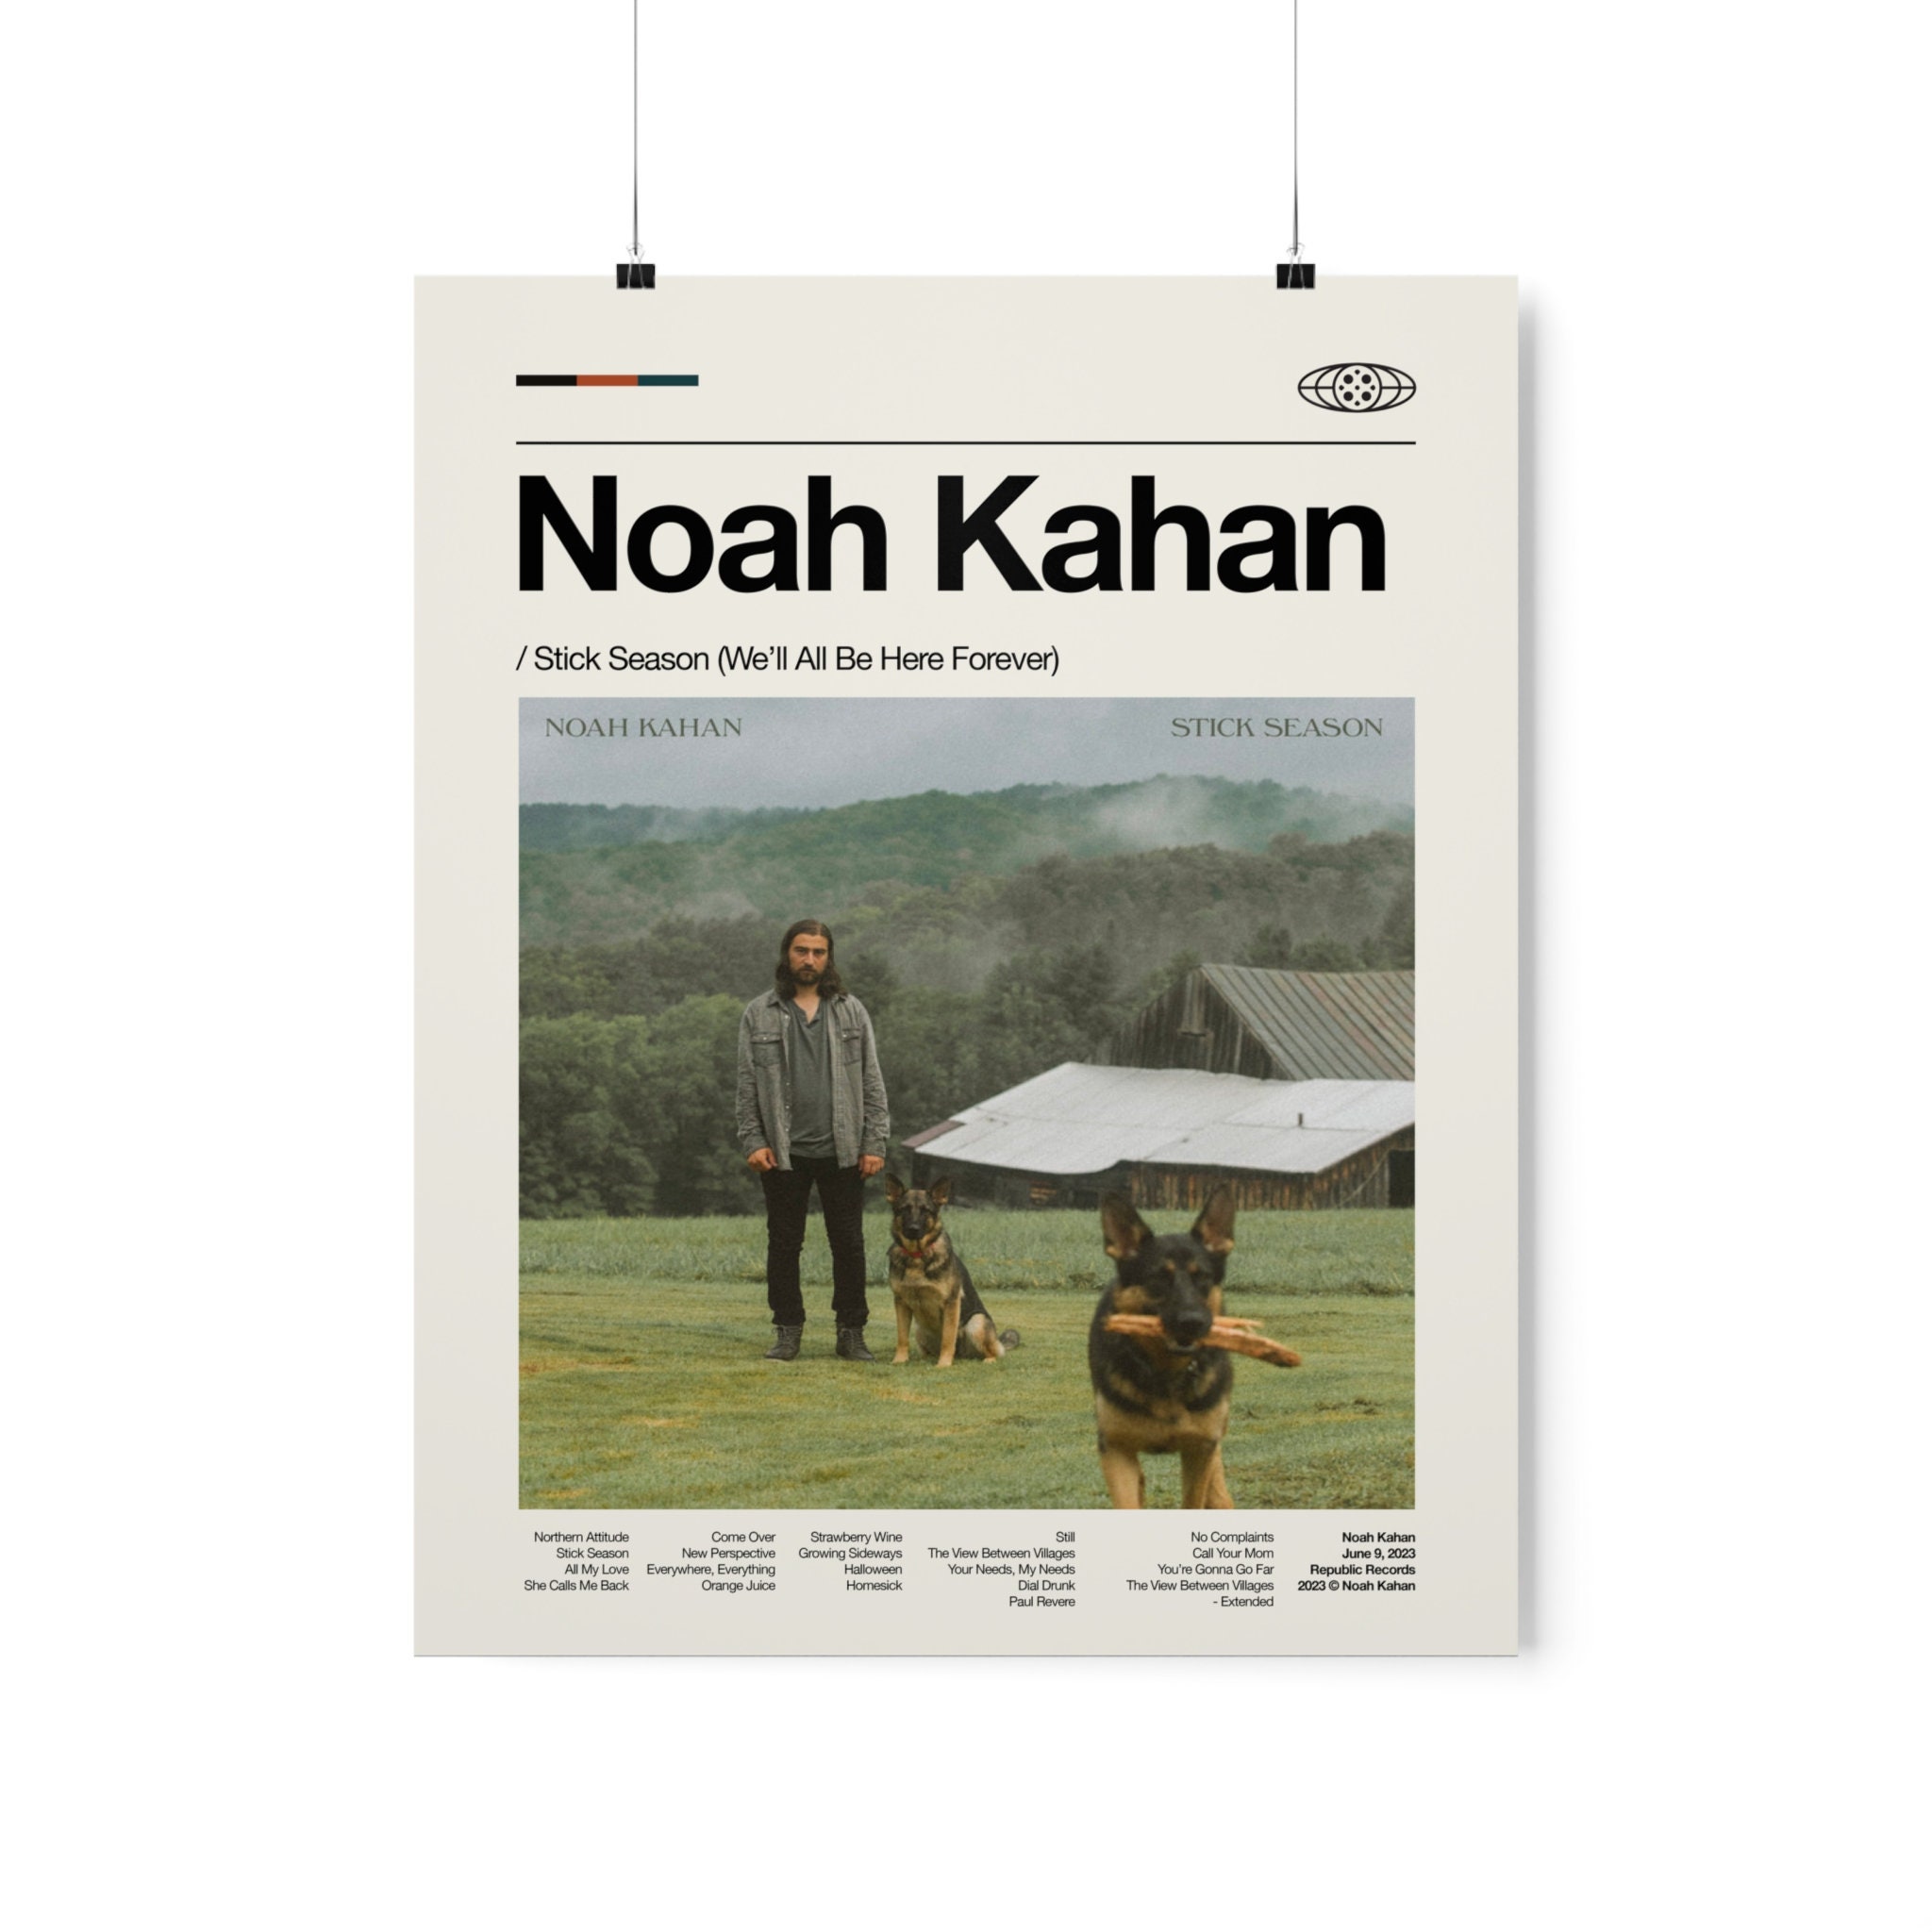 Noah Kahan - Stick Season